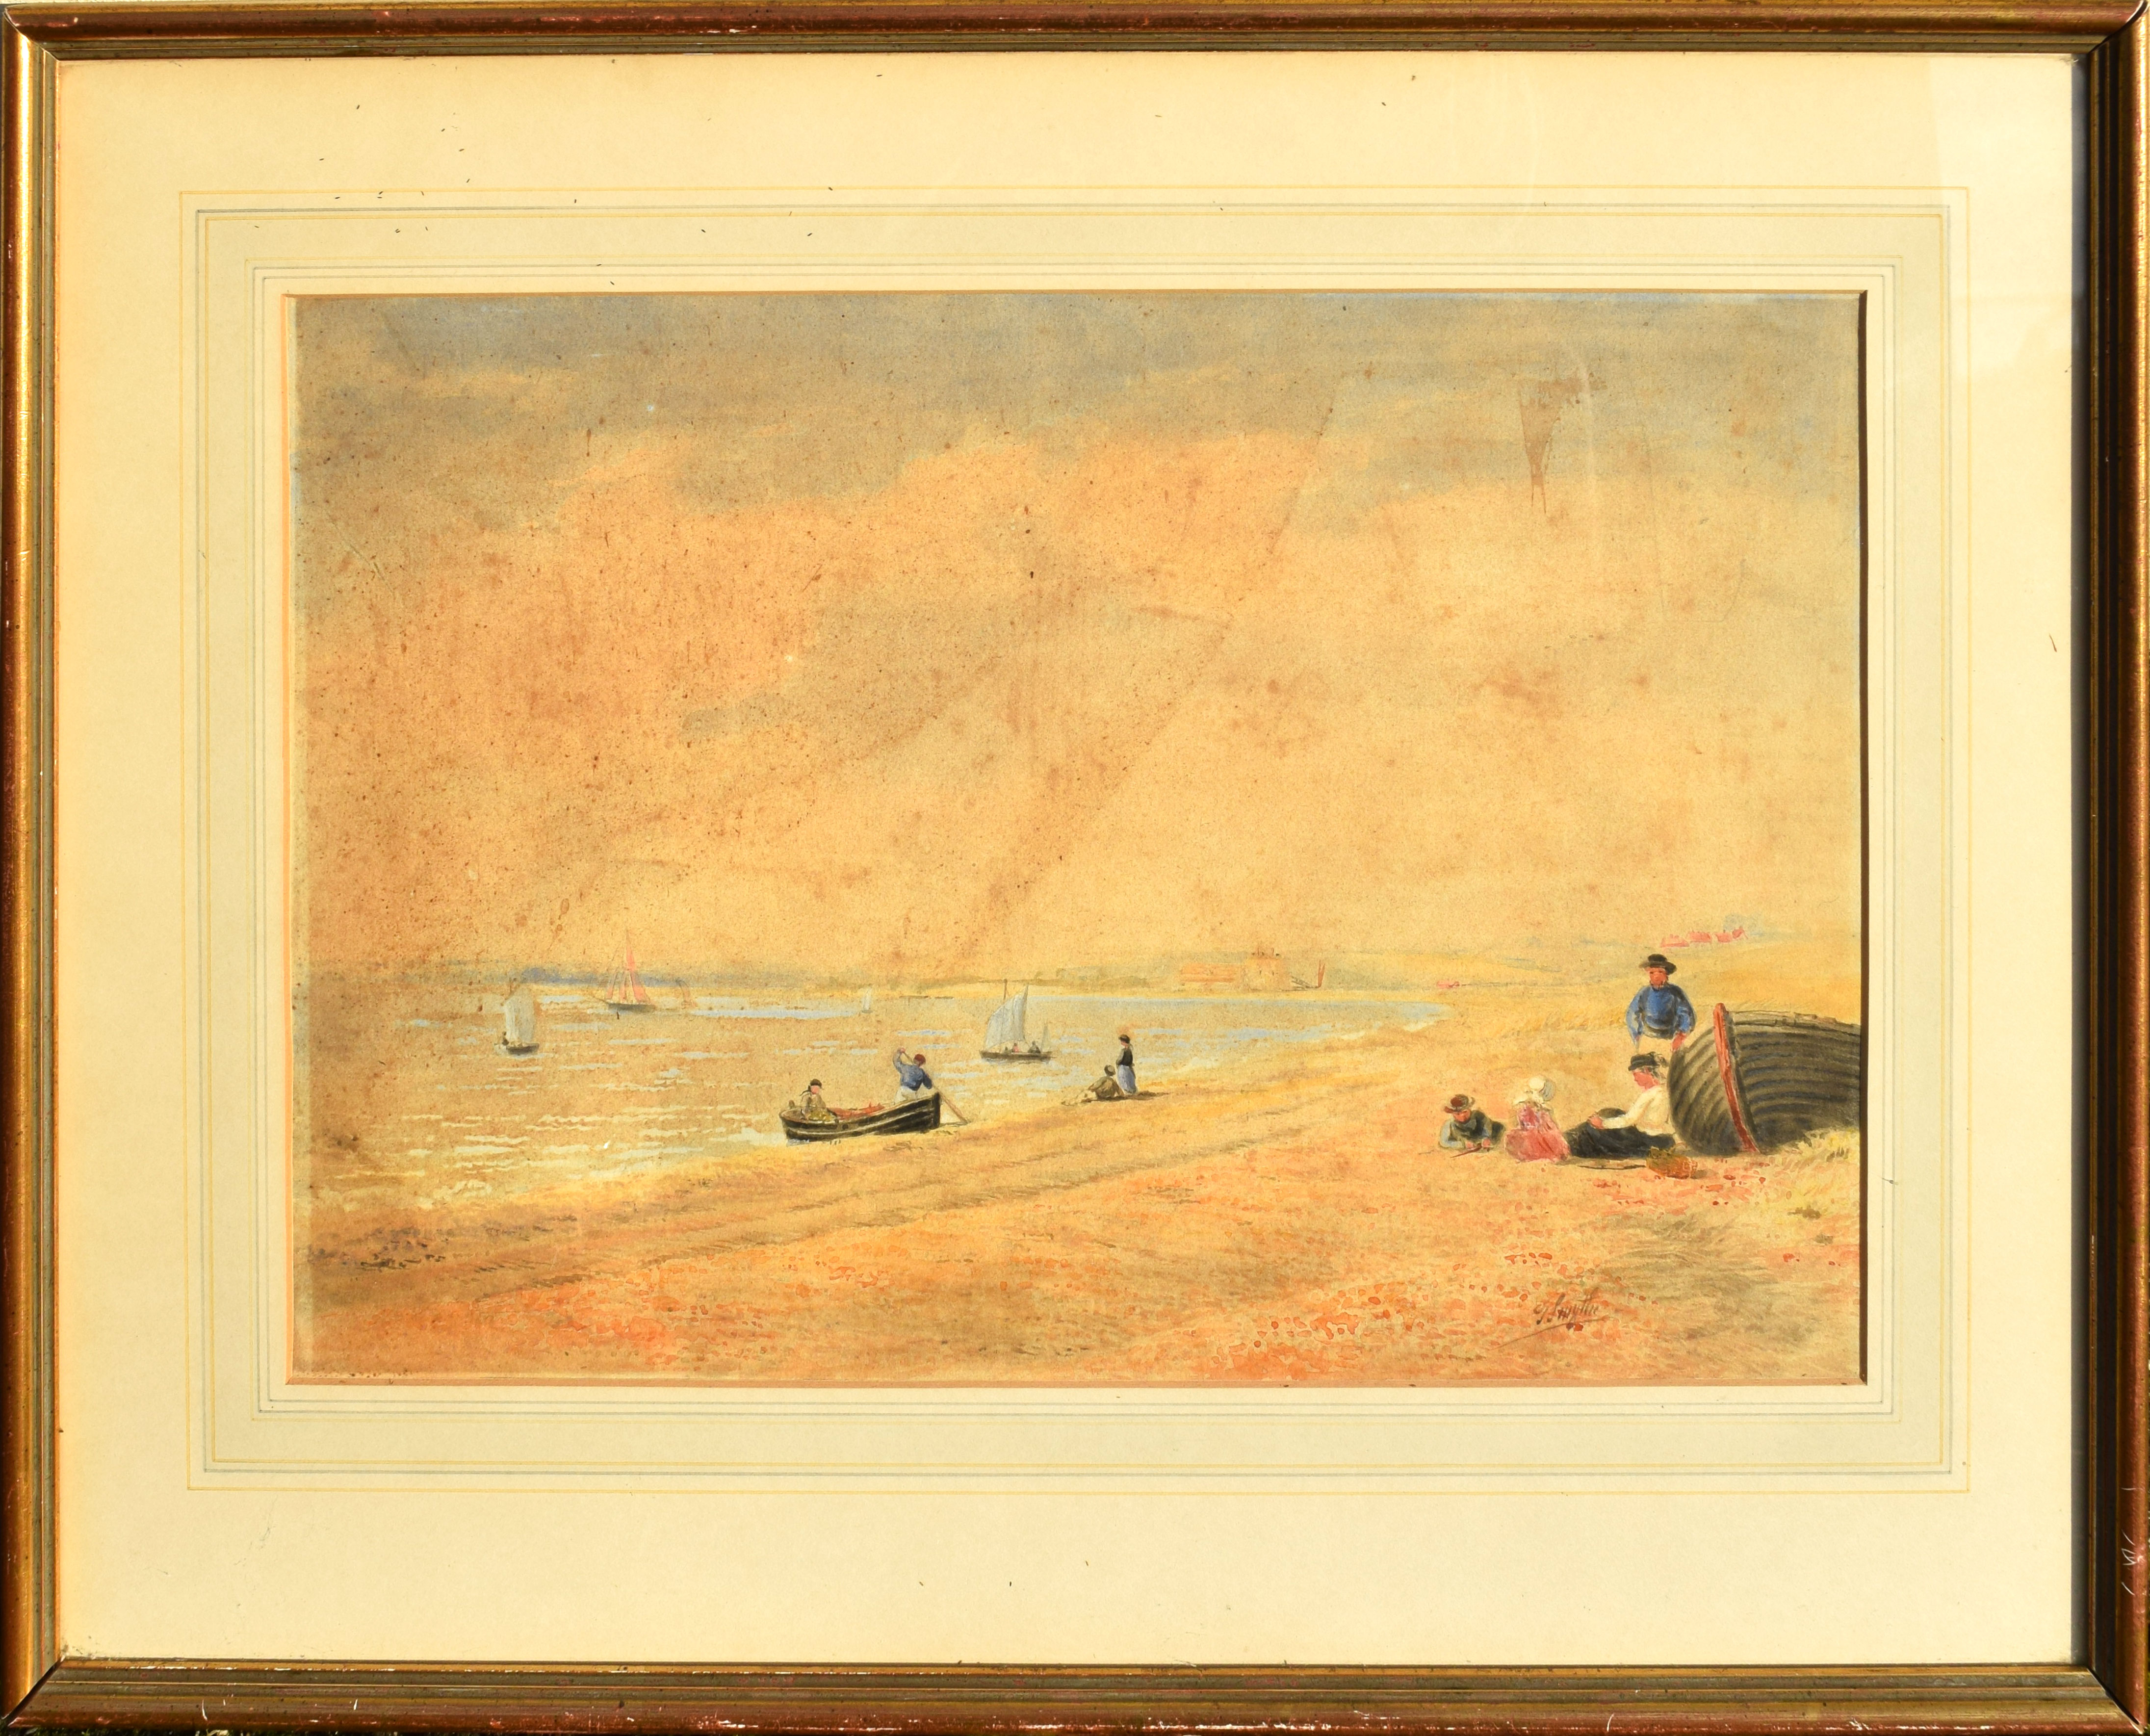 Thomas Smythe, "Old Felixstowe", watercolour, signed lower right, 30 x 44cm. Provenance: Mandell's